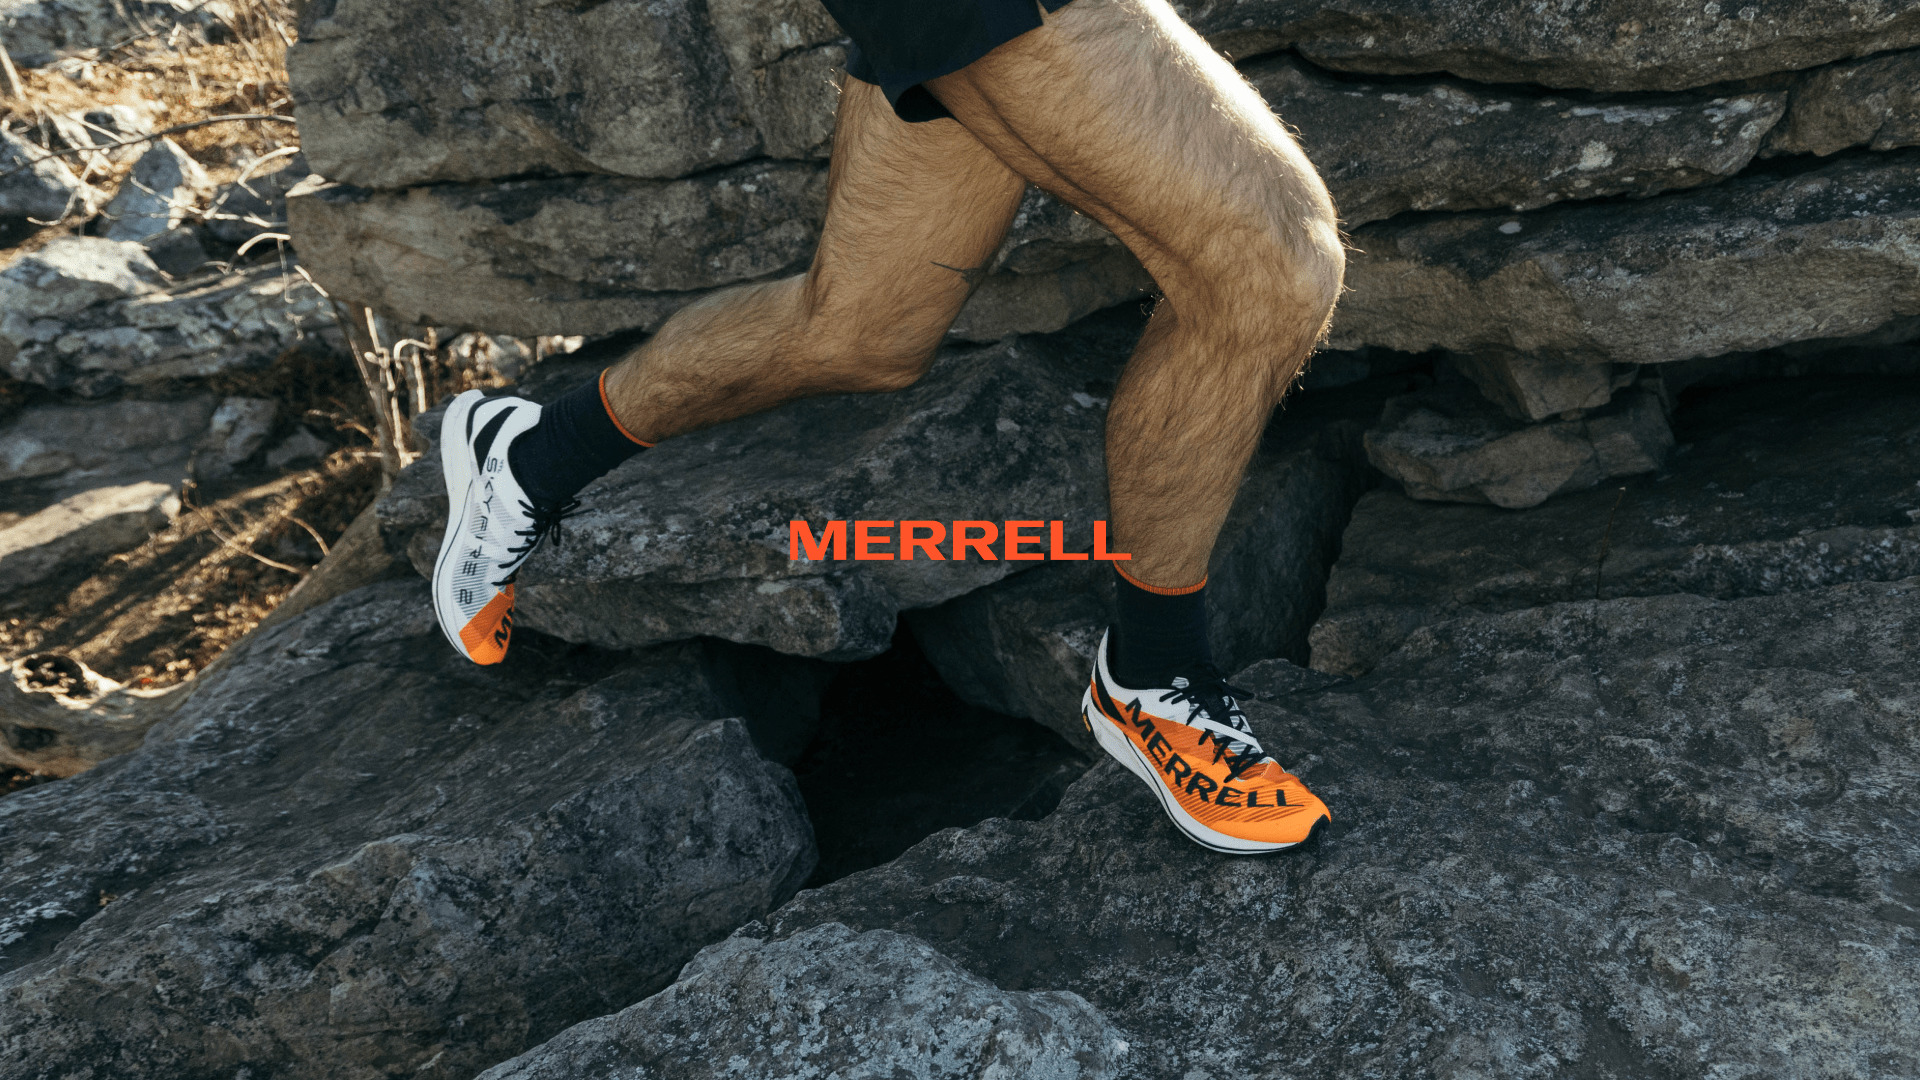  Merrell Zapatillas de running de competición para